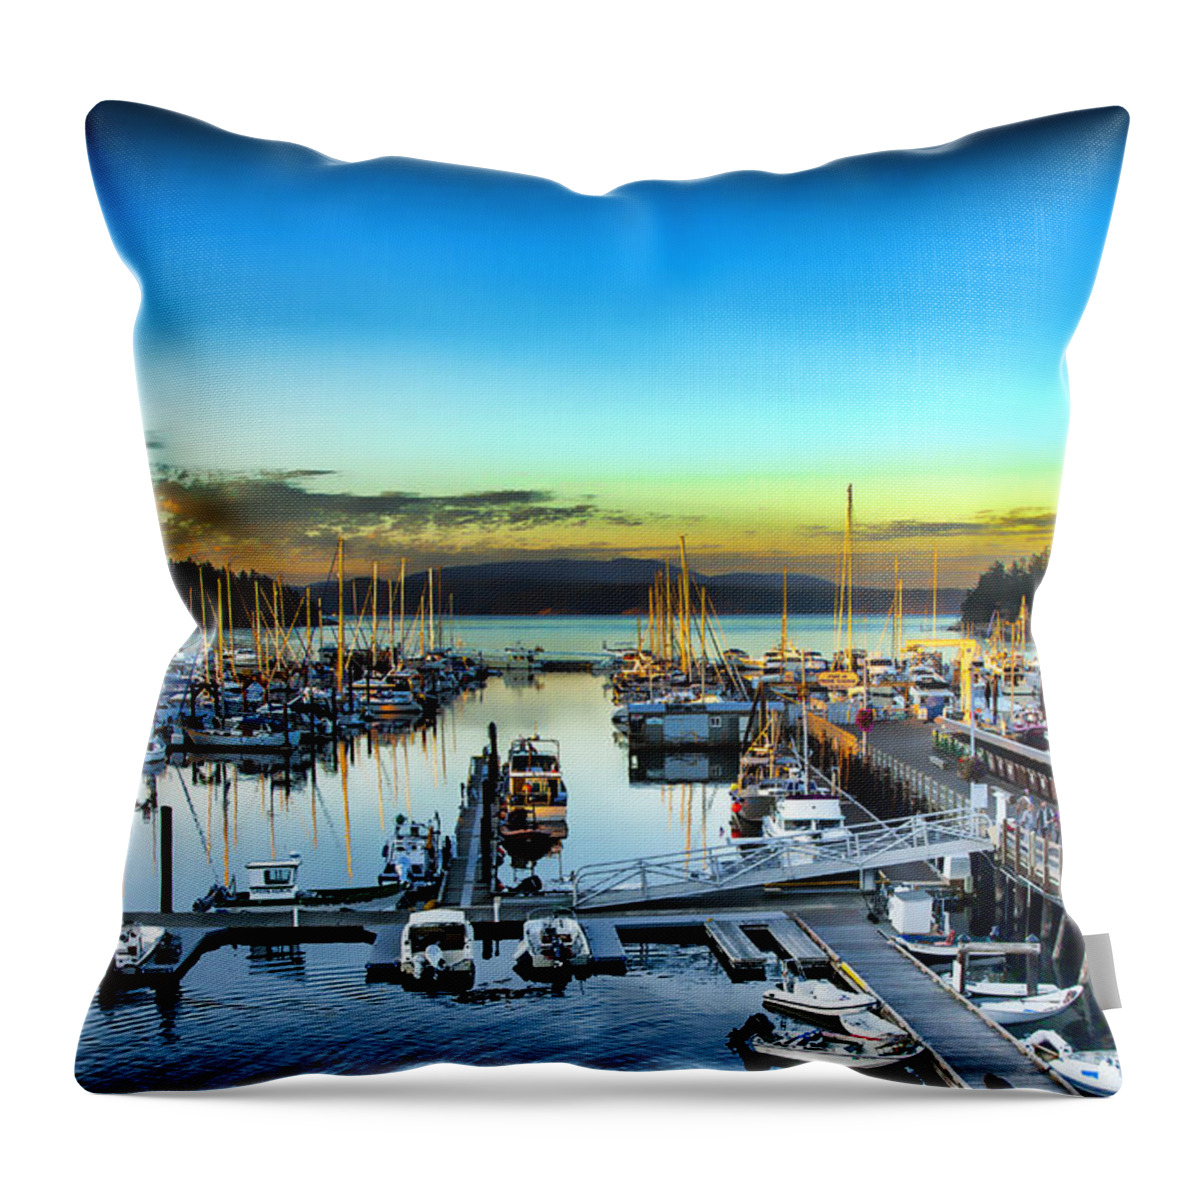 Marina Throw Pillow featuring the photograph Friday Harbor by J Michael Nettik